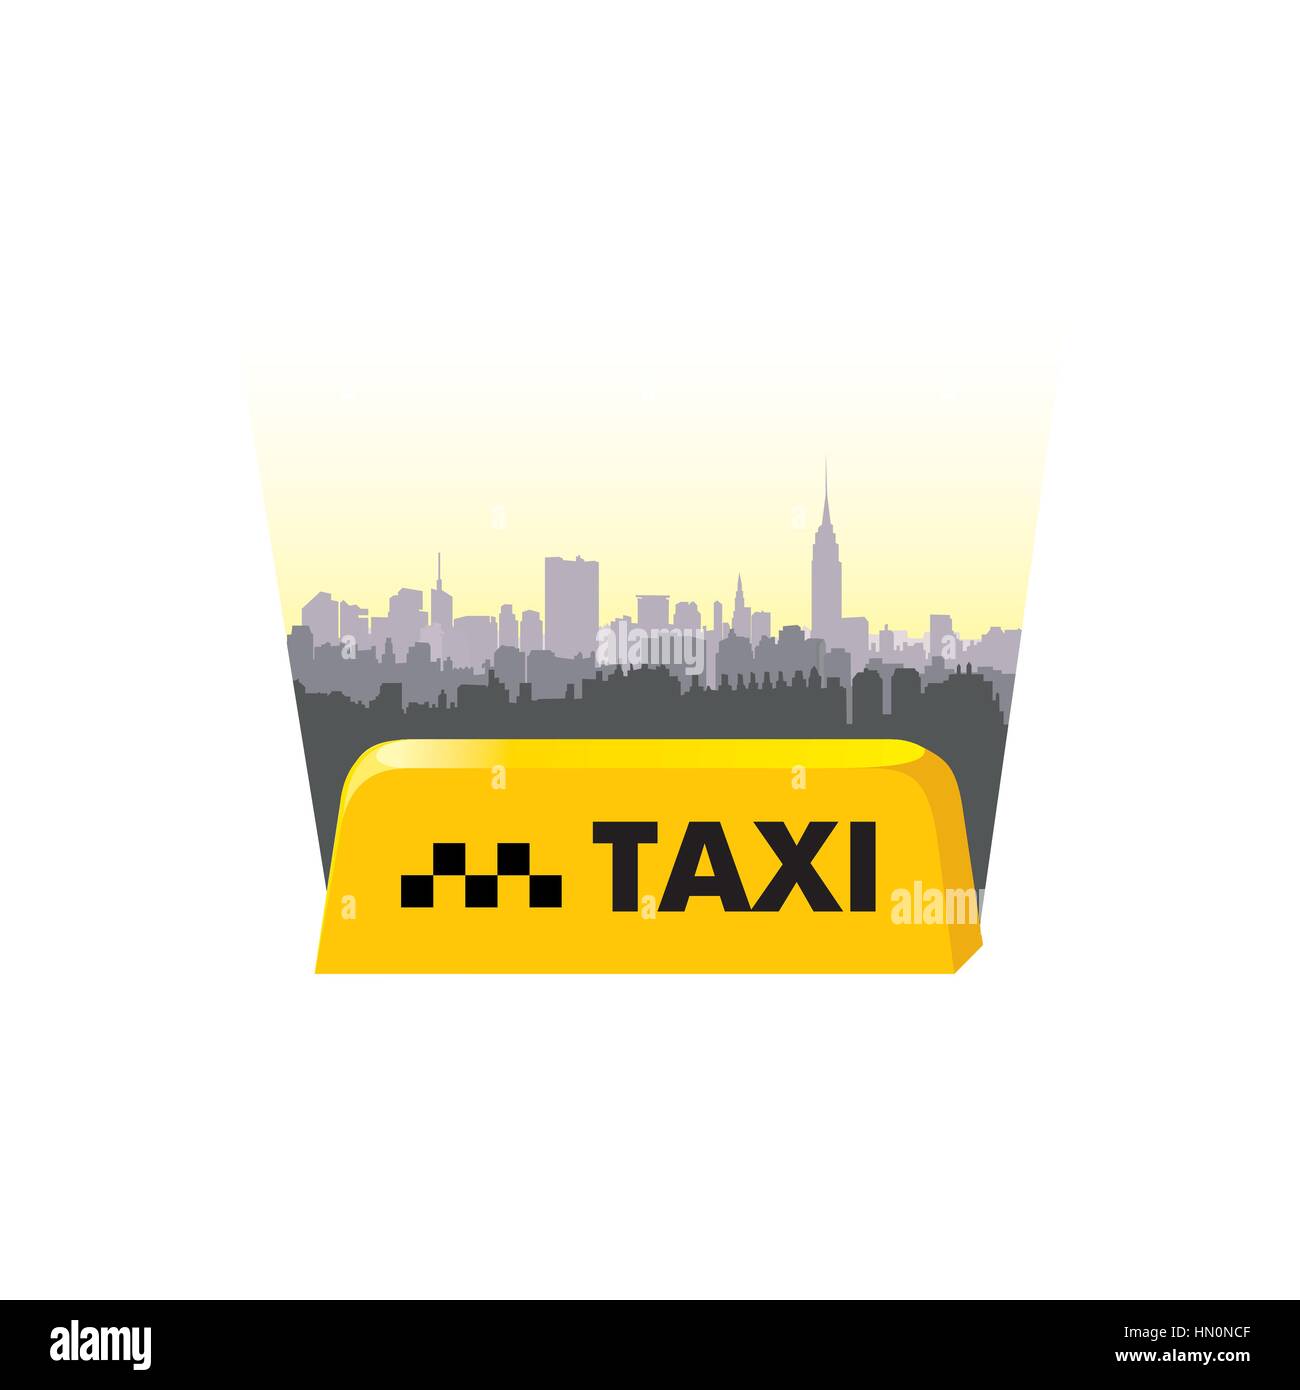 Servicio de taxi taxi. cabezal cartel city antecedentes. Llame al paisaje urbano de taxi concepto Ilustración del Vector